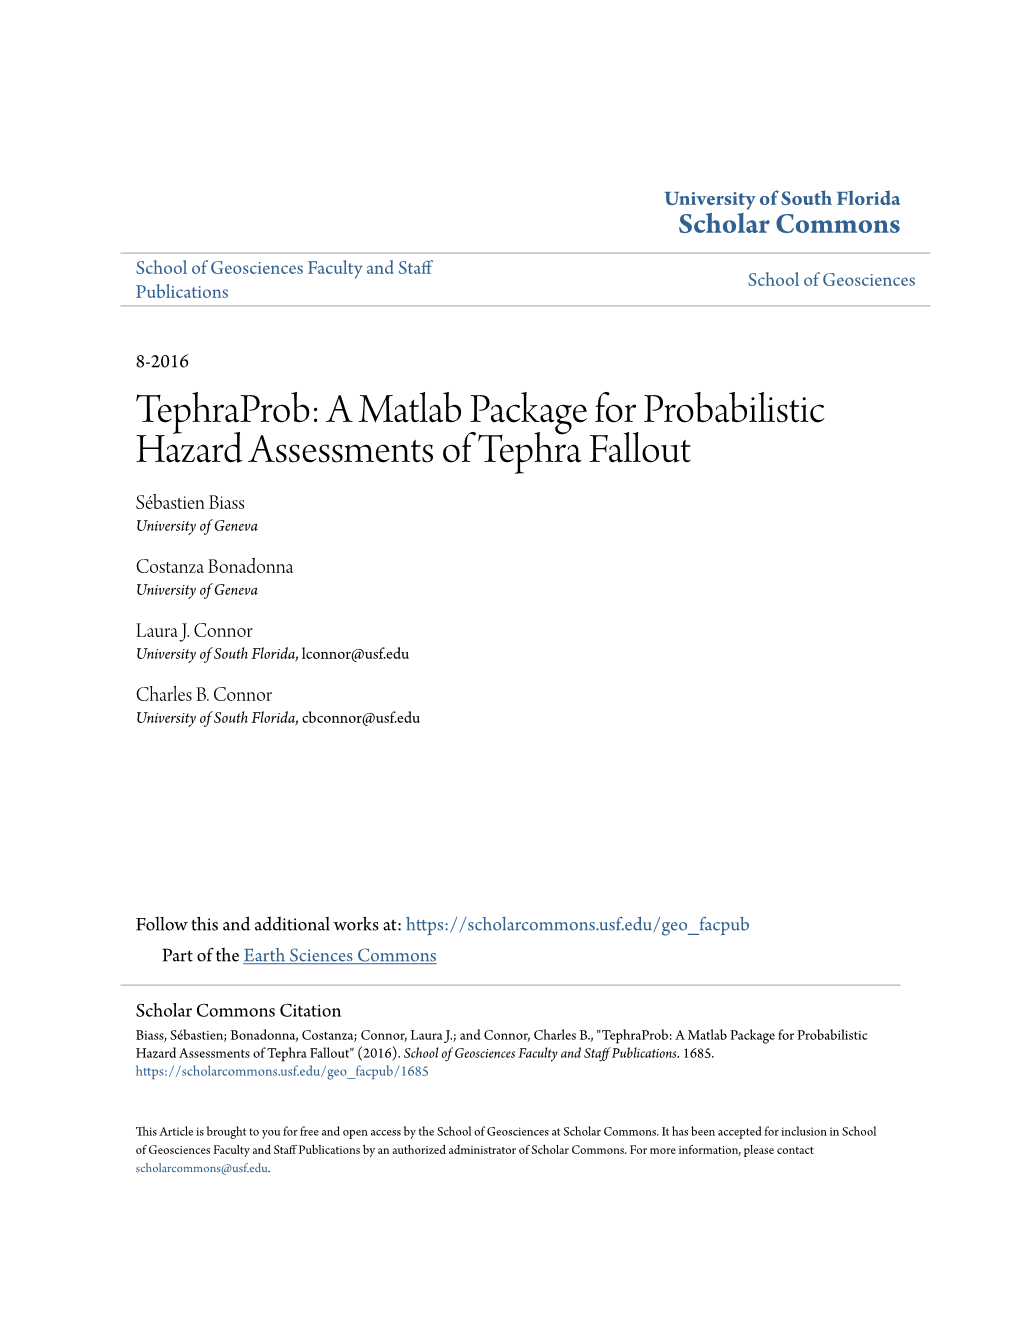 A Matlab Package for Probabilistic Hazard Assessments of Tephra Fallout Sébastien Biass University of Geneva